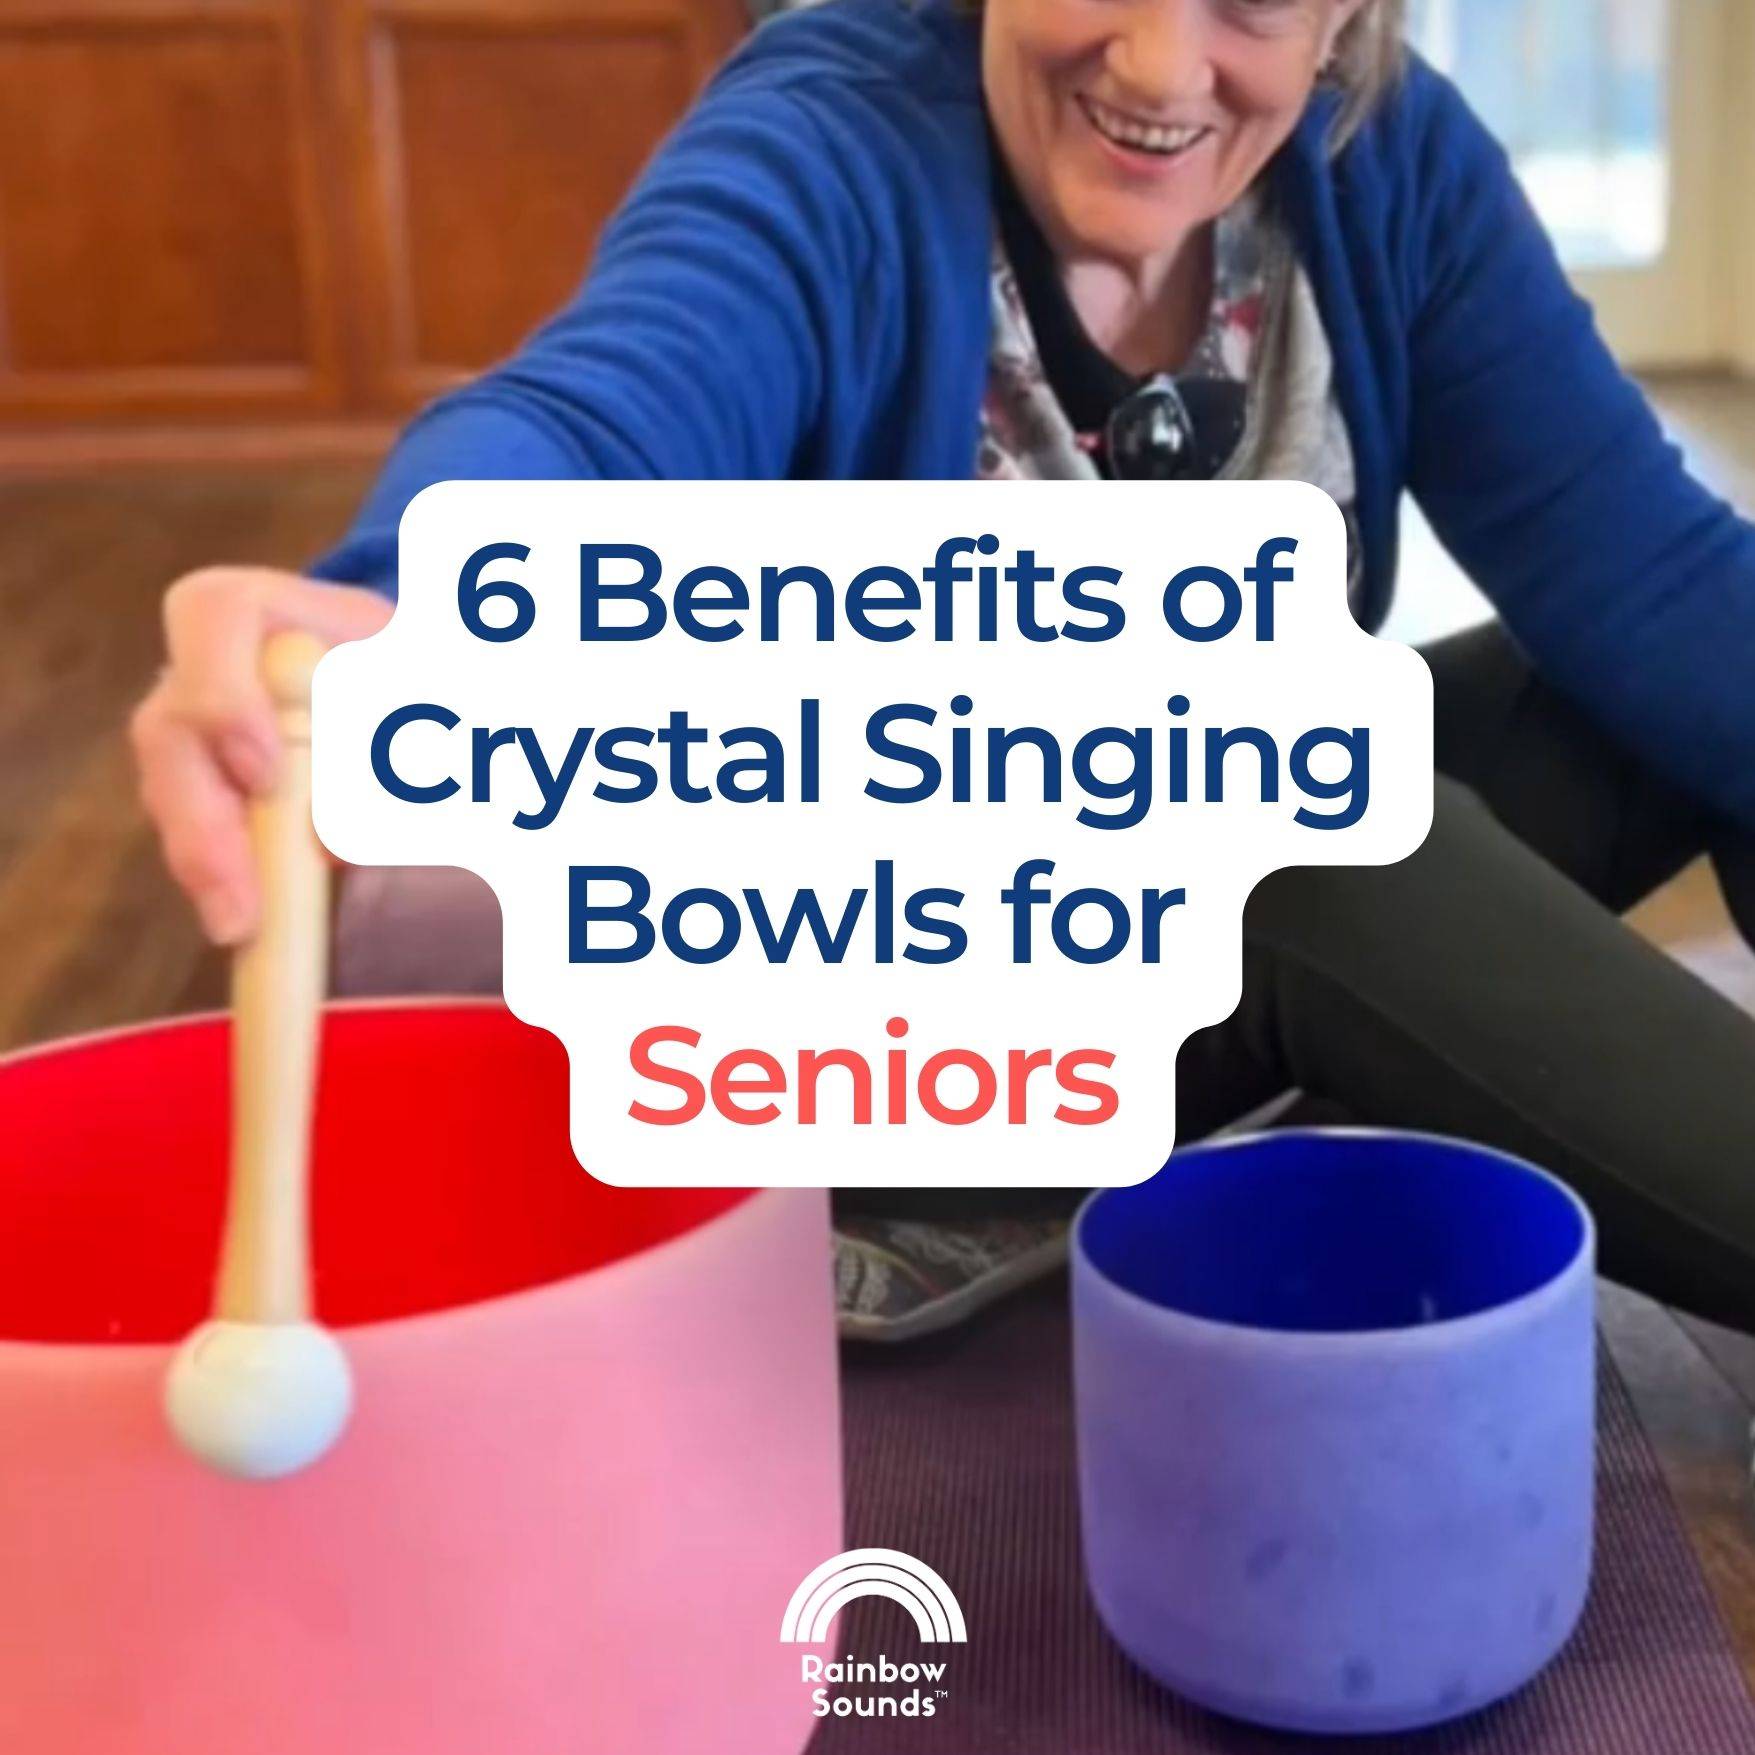 6 Benefits of Crystal Singing Bowls for Seniors